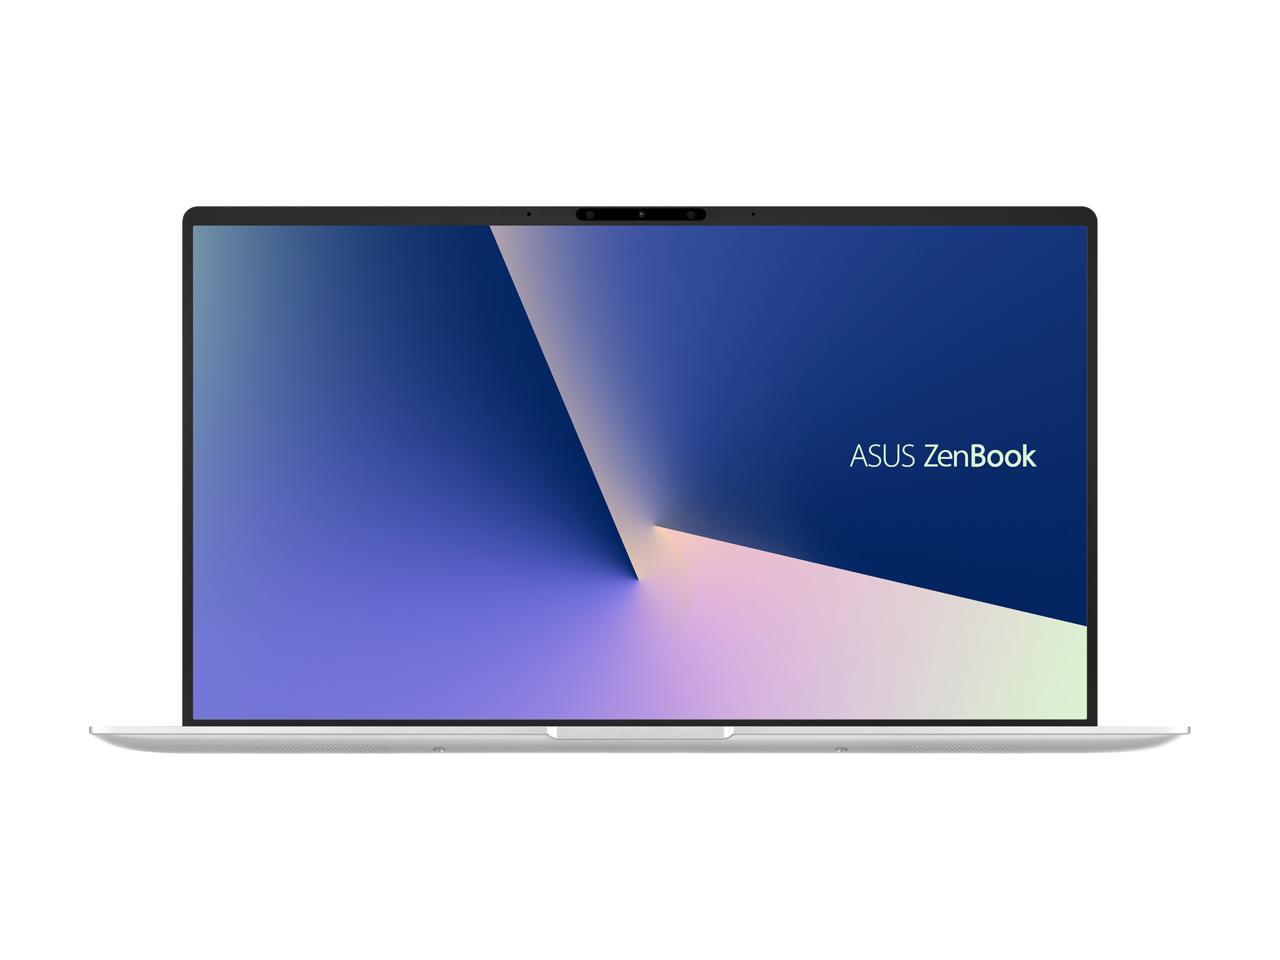 ASUS ZenBook 14 Ultra-Slim Laptop 14" Full HD NanoEdge Bezel, Intel Core i5-8265U (Whiskey Lake), 8 GB RAM, 256 GB PCIe SSD, Backlit KB, NumberPad, Windows 10 Pro - UX433FA-XH54, Icicle Silver